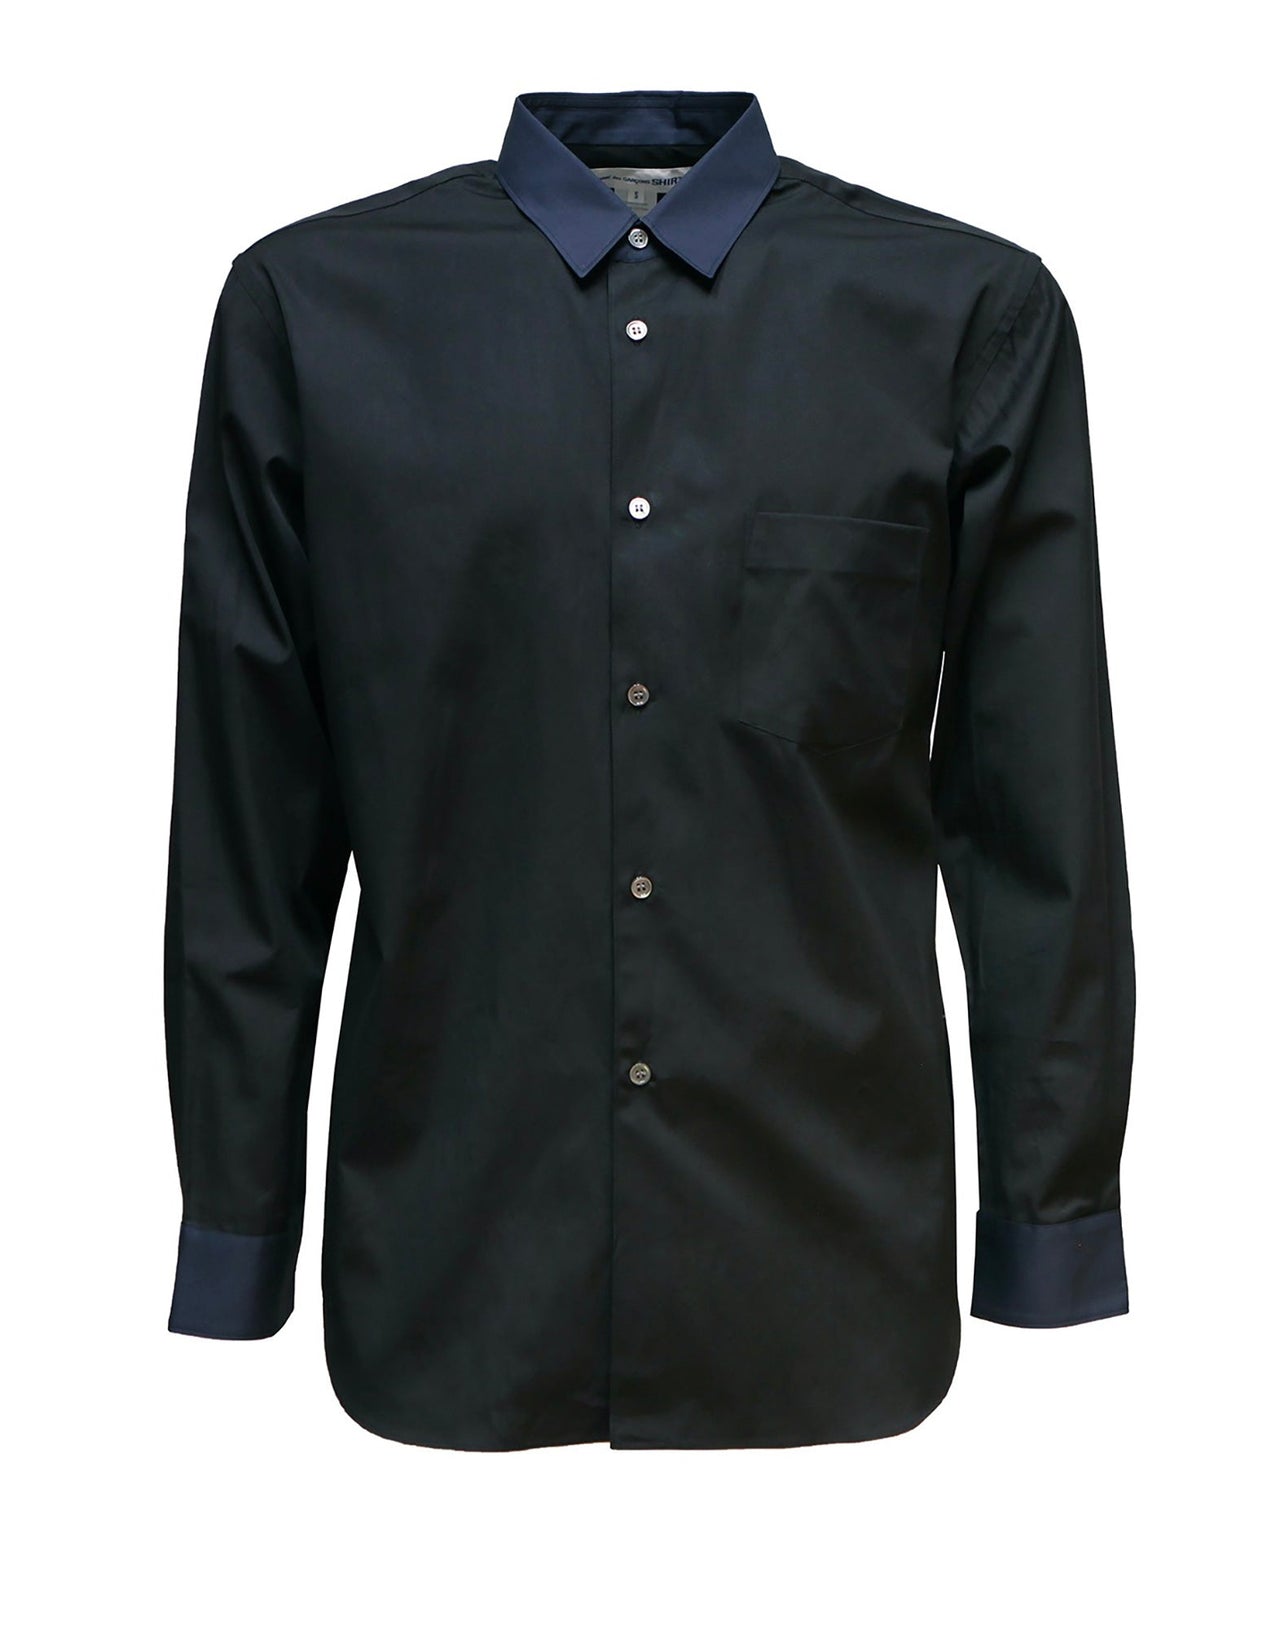 C.d.g. Black detail shirt